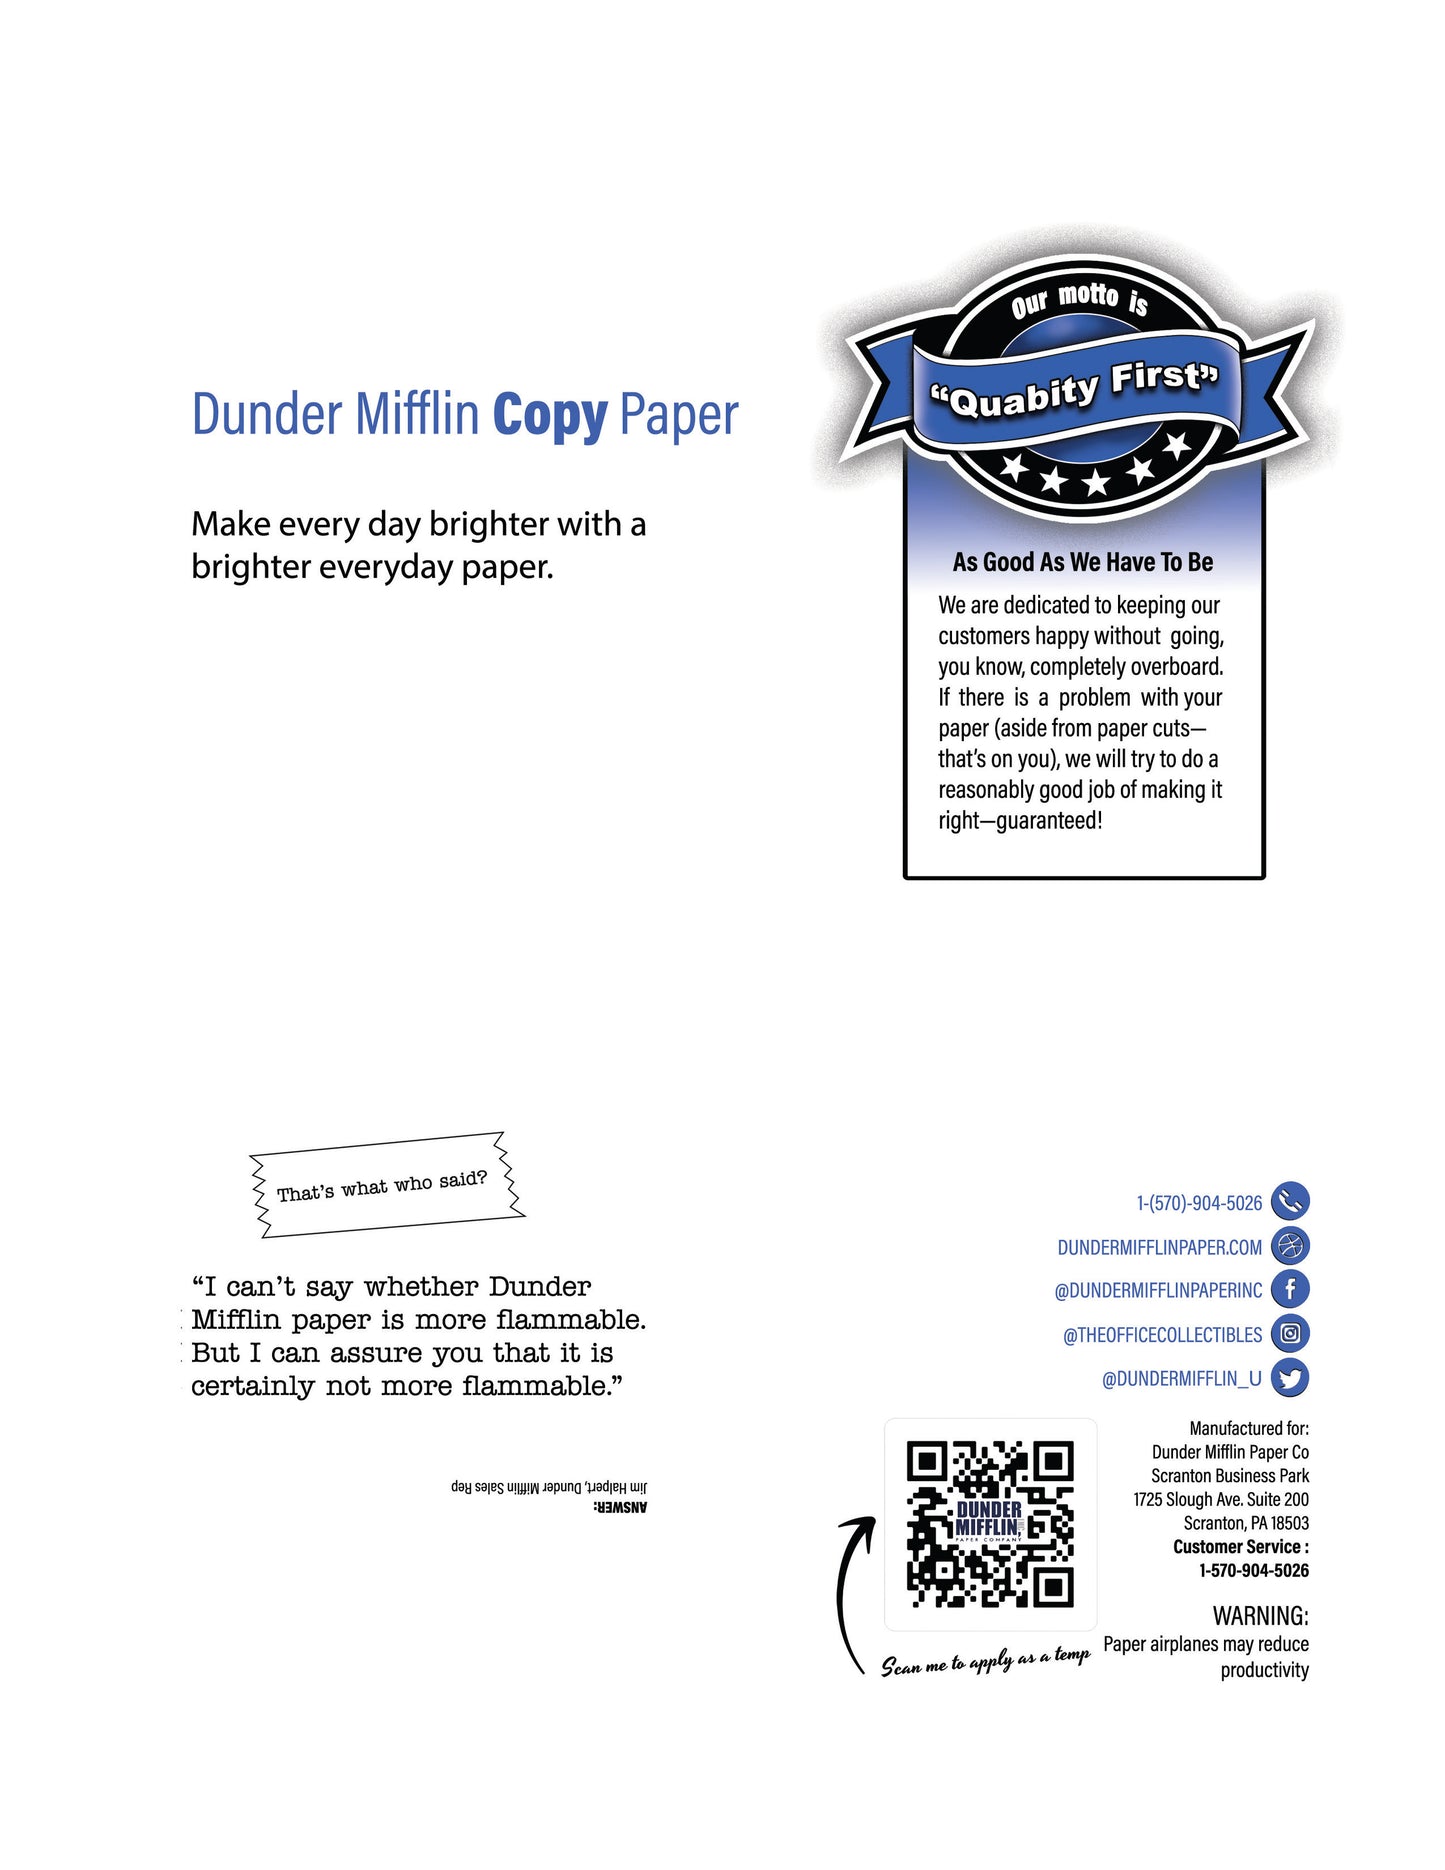 Premium Copy Paper – Dunder Mifflin Paper Co.